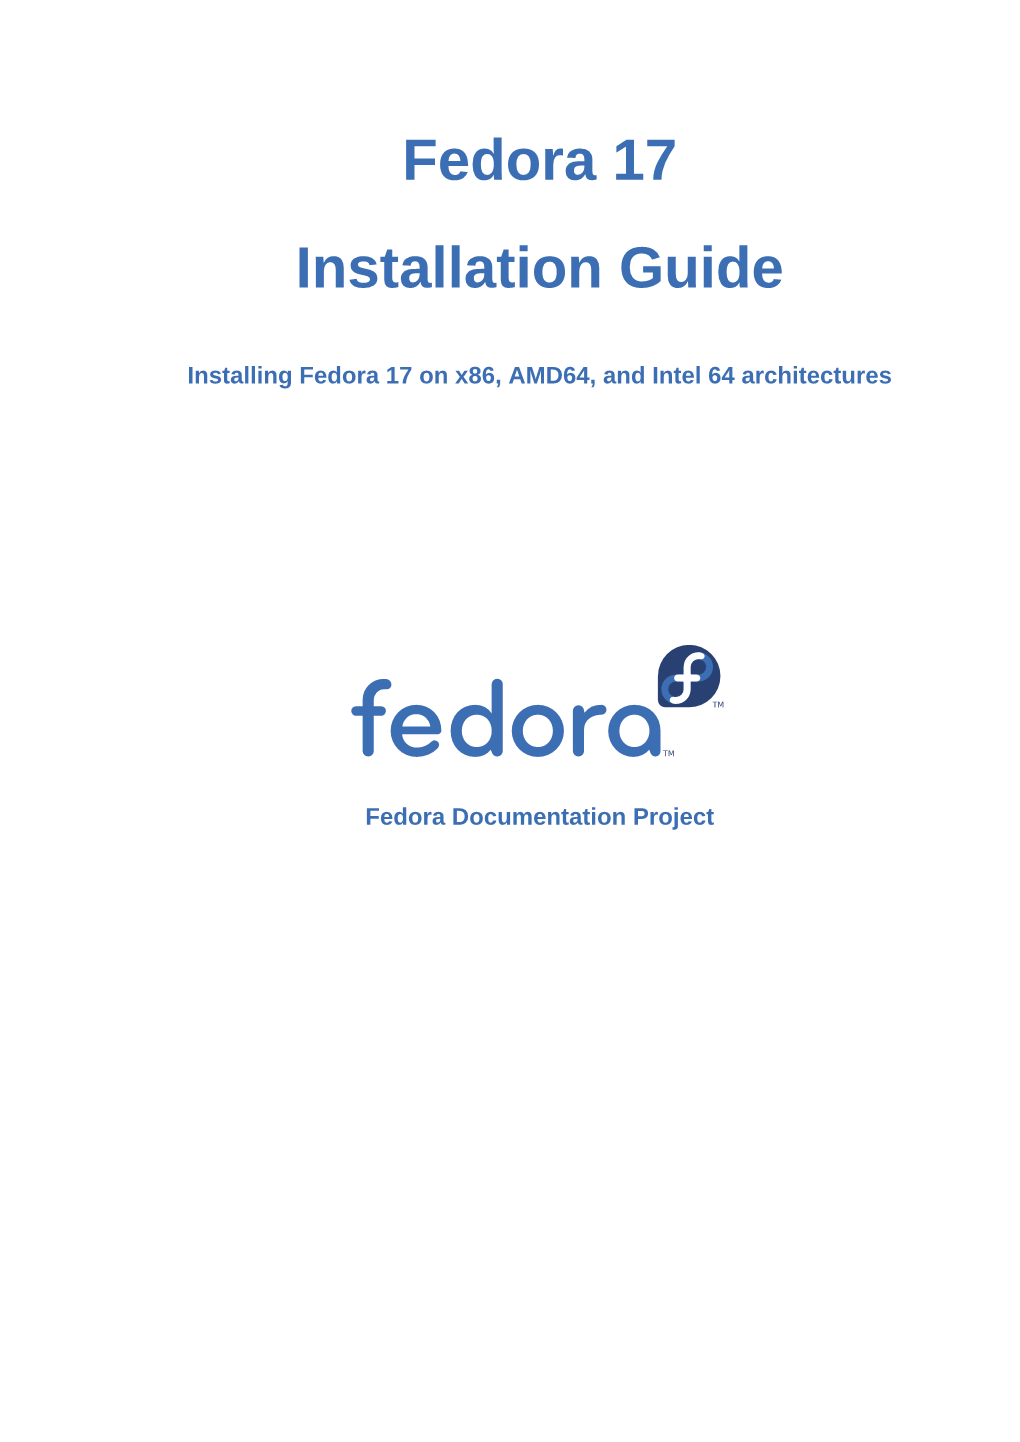 Fedora 17 Installation Guide